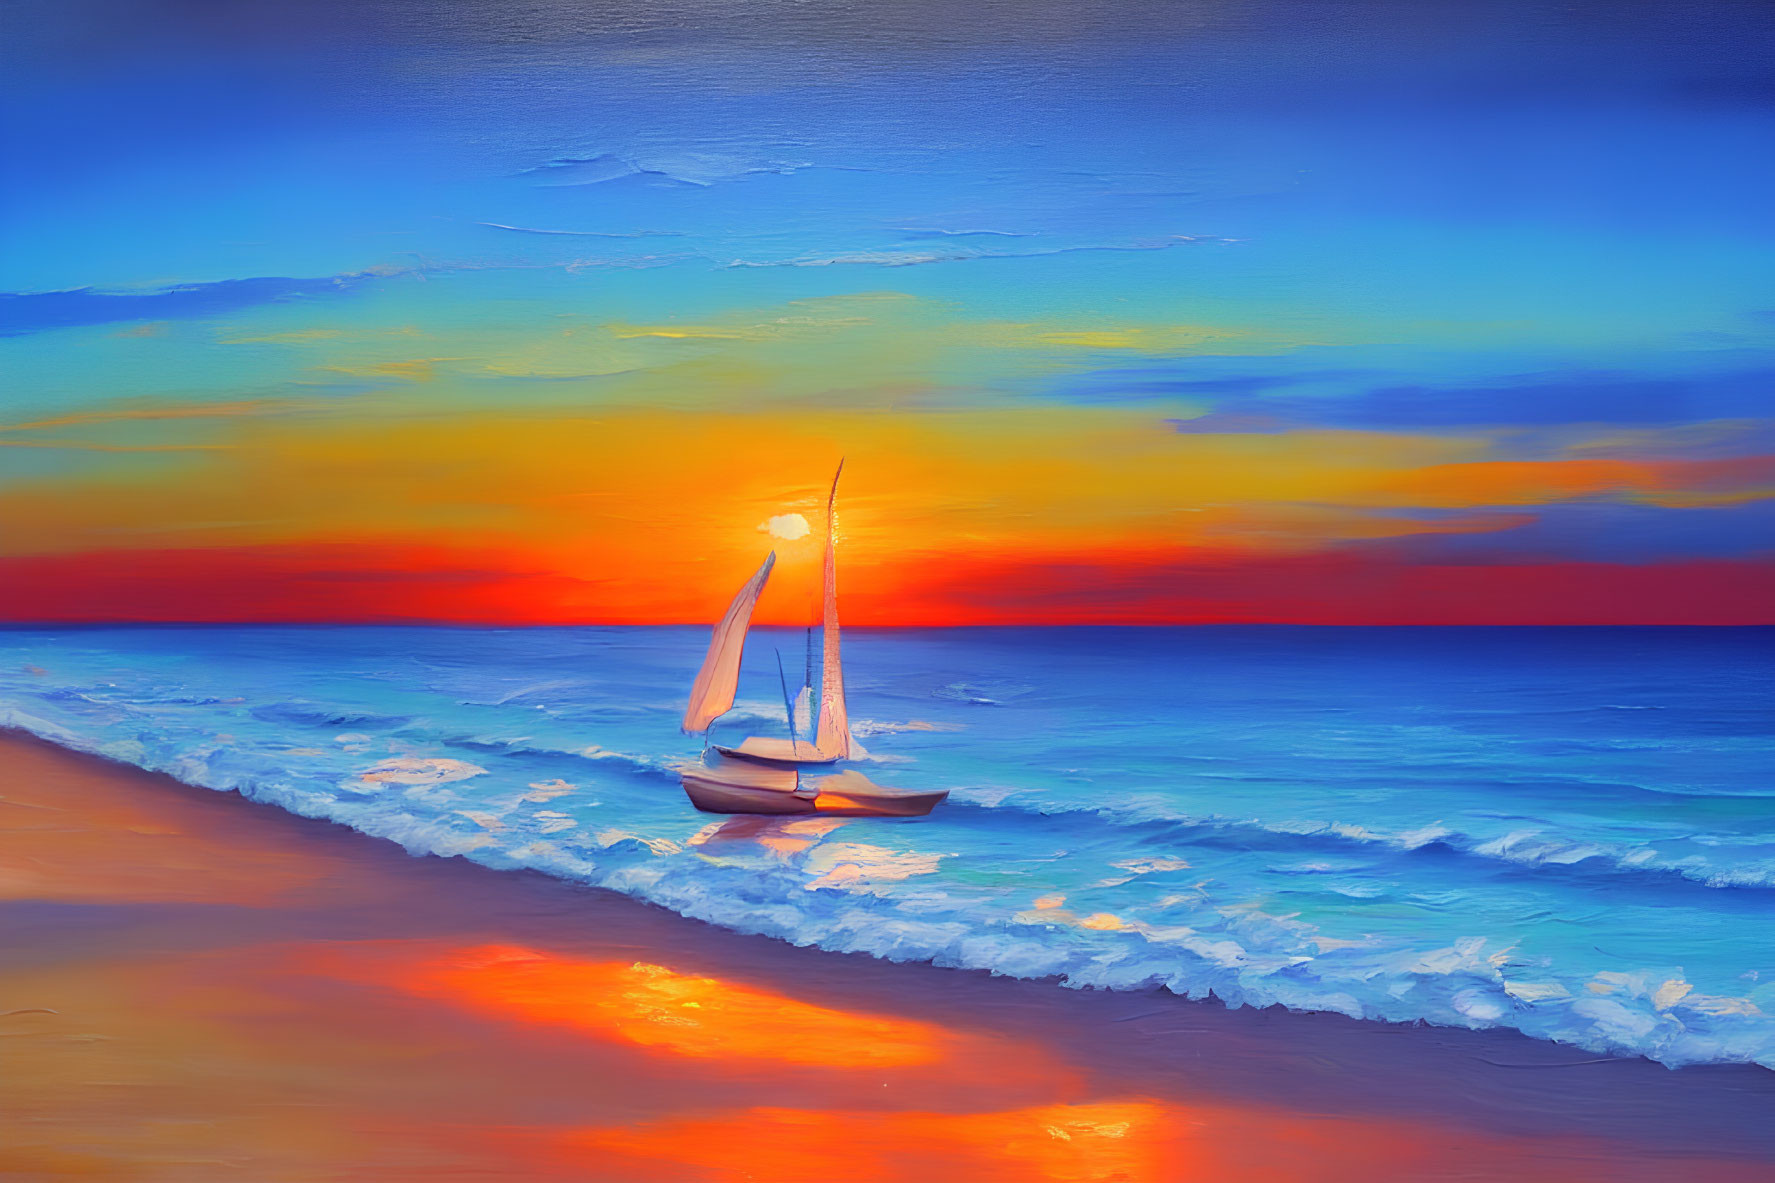 Vivid Sunset with Orange and Blue Hues Reflecting on Sea